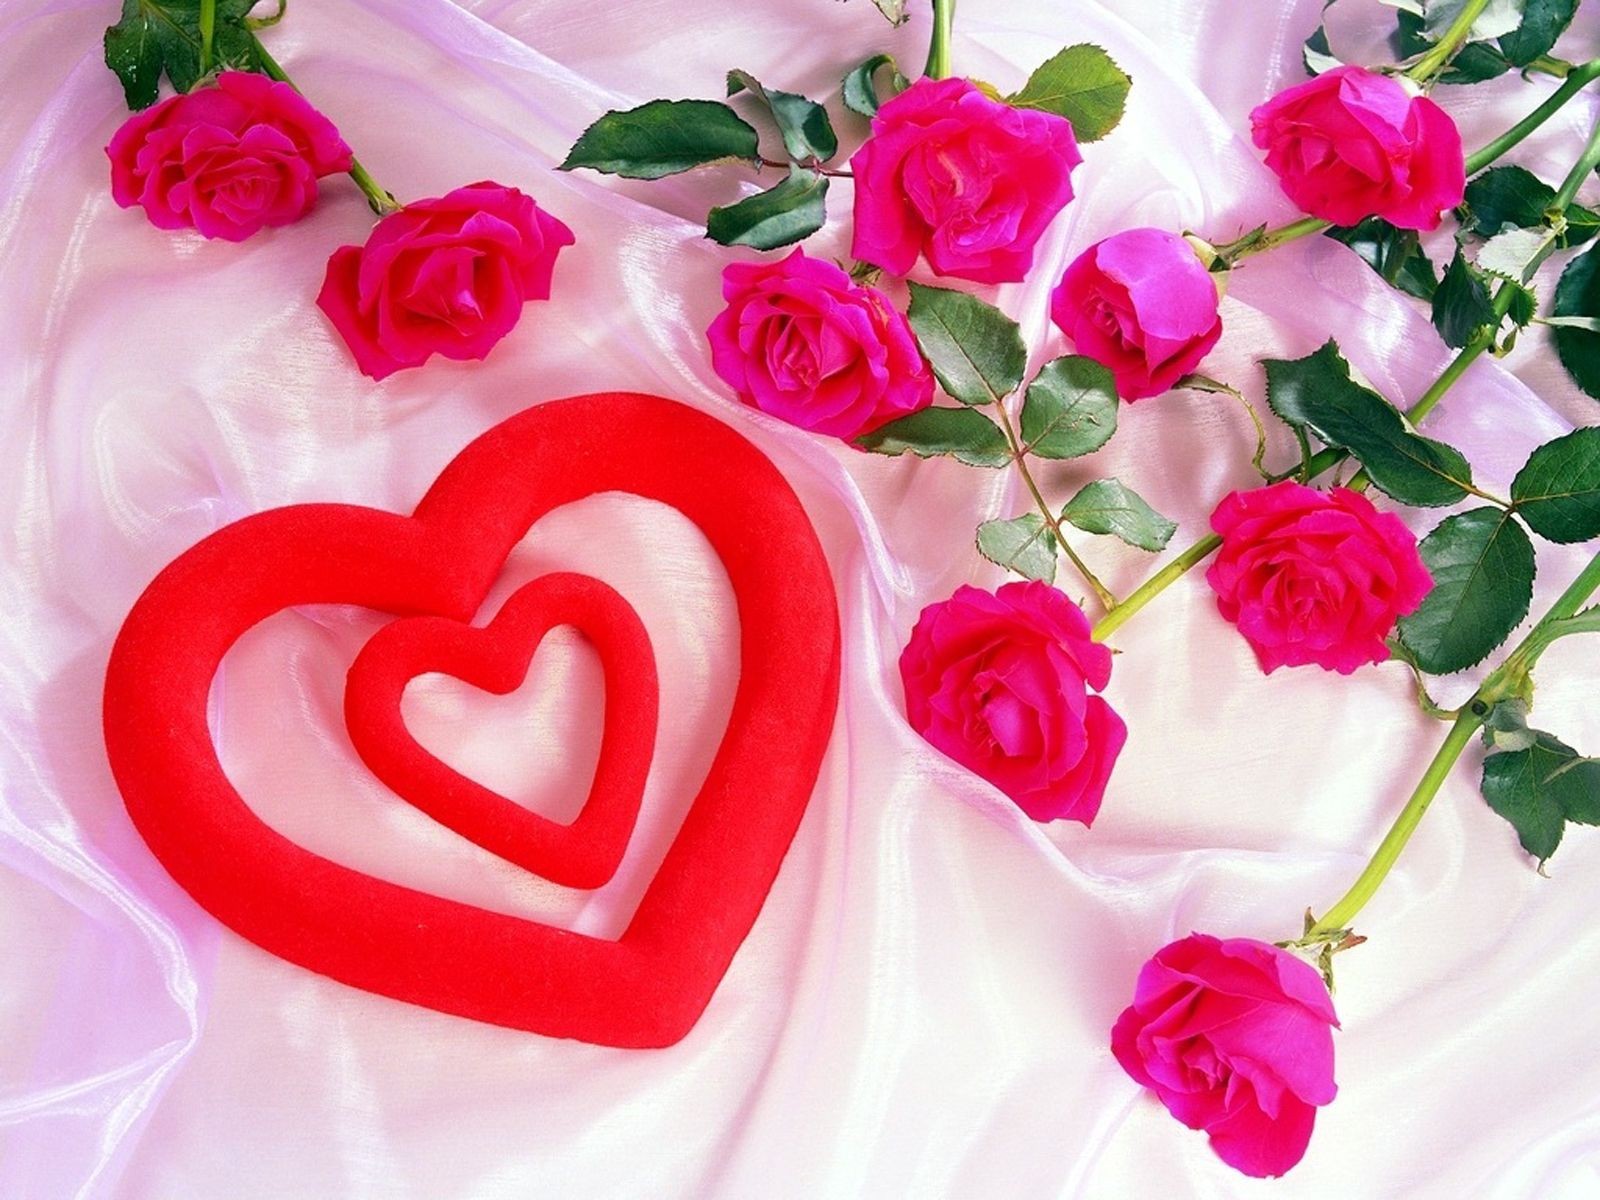 Red Valentine Love Heart Full HD Wallpaper Image